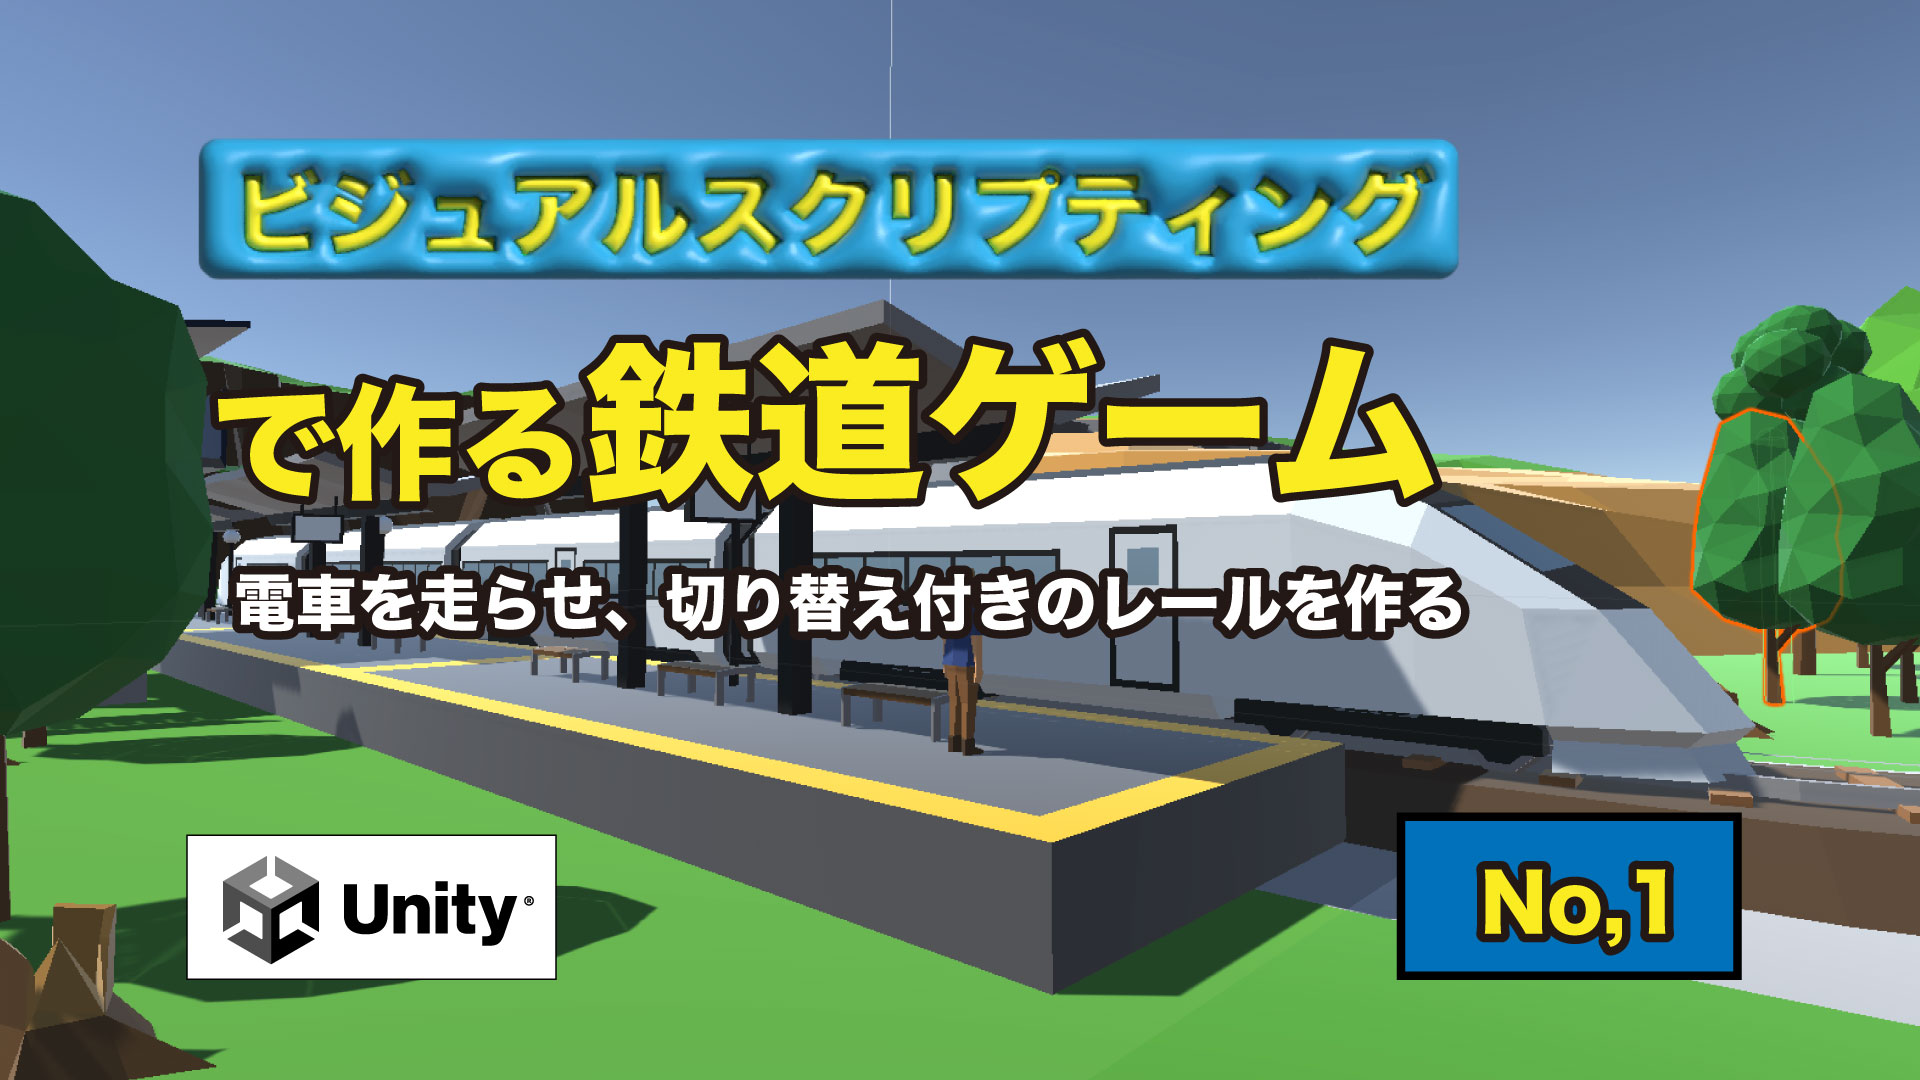 Unityビジュアルスクリプティングでつくる鉄道ゲームNo,1 電車を走らせ切替器付き線路を作る